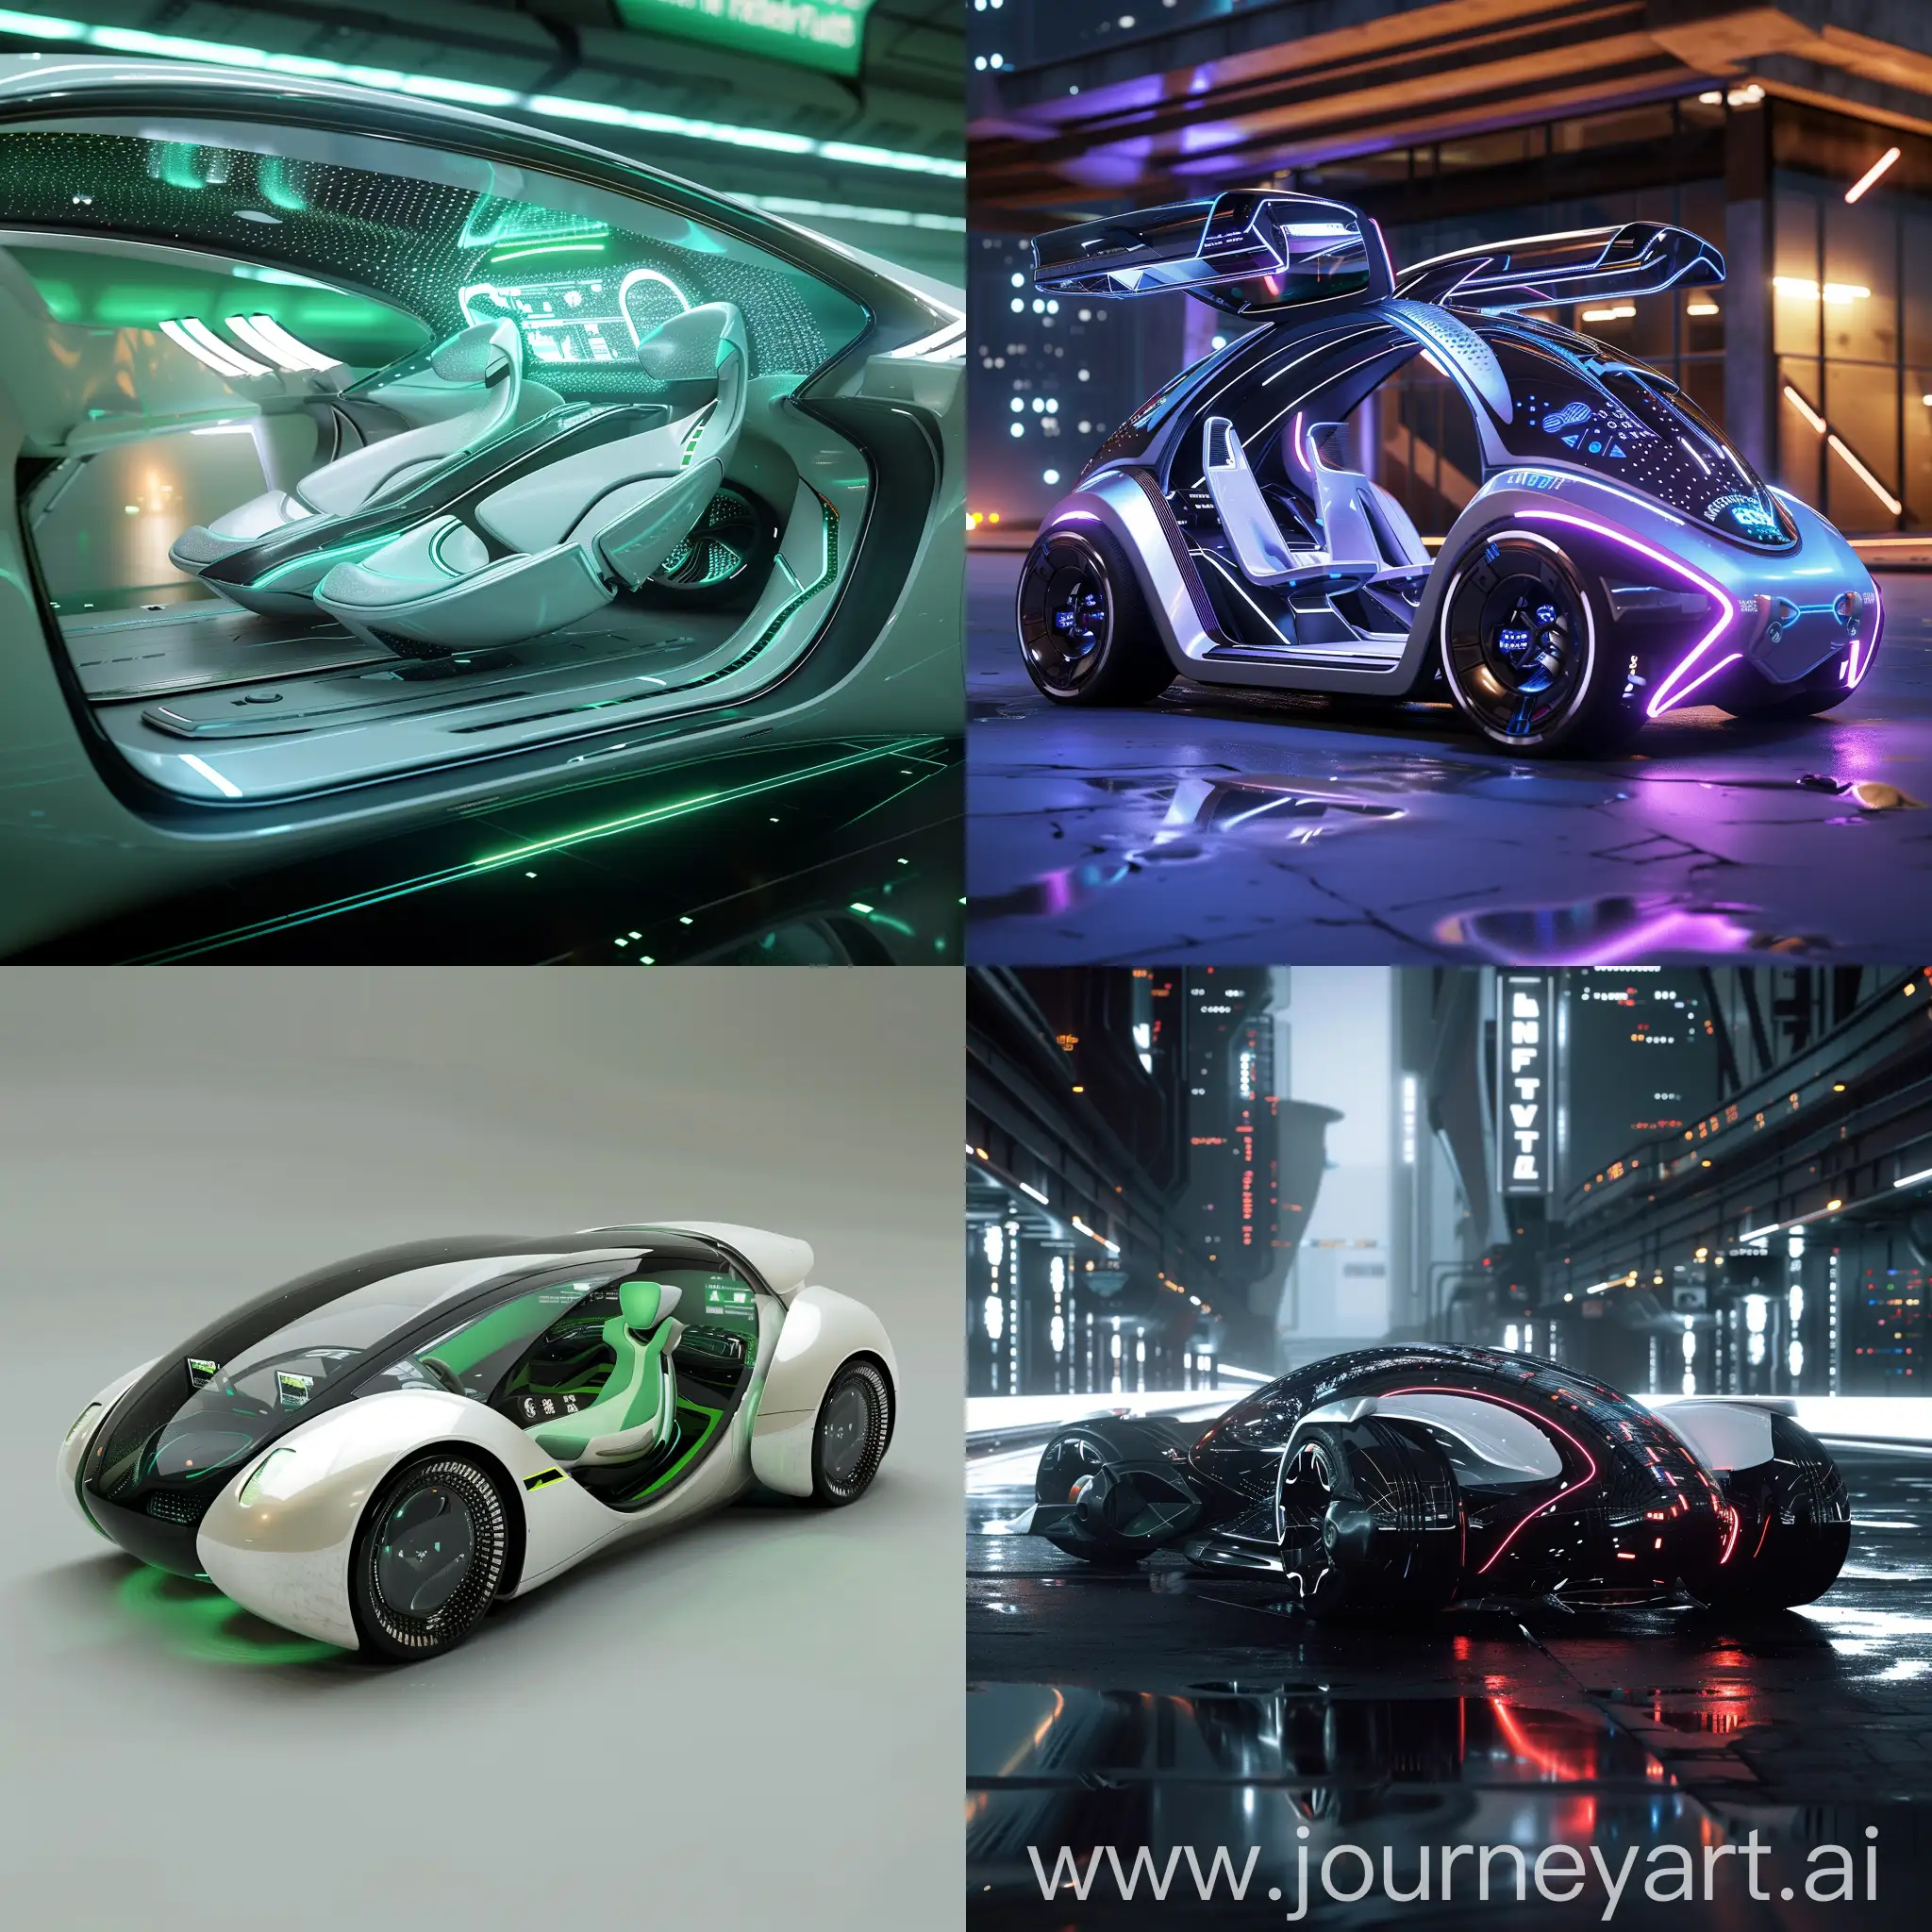 Futuristic-SelfReconfigurable-Car-with-Biometric-Interface-and-Advanced-AI-Systems